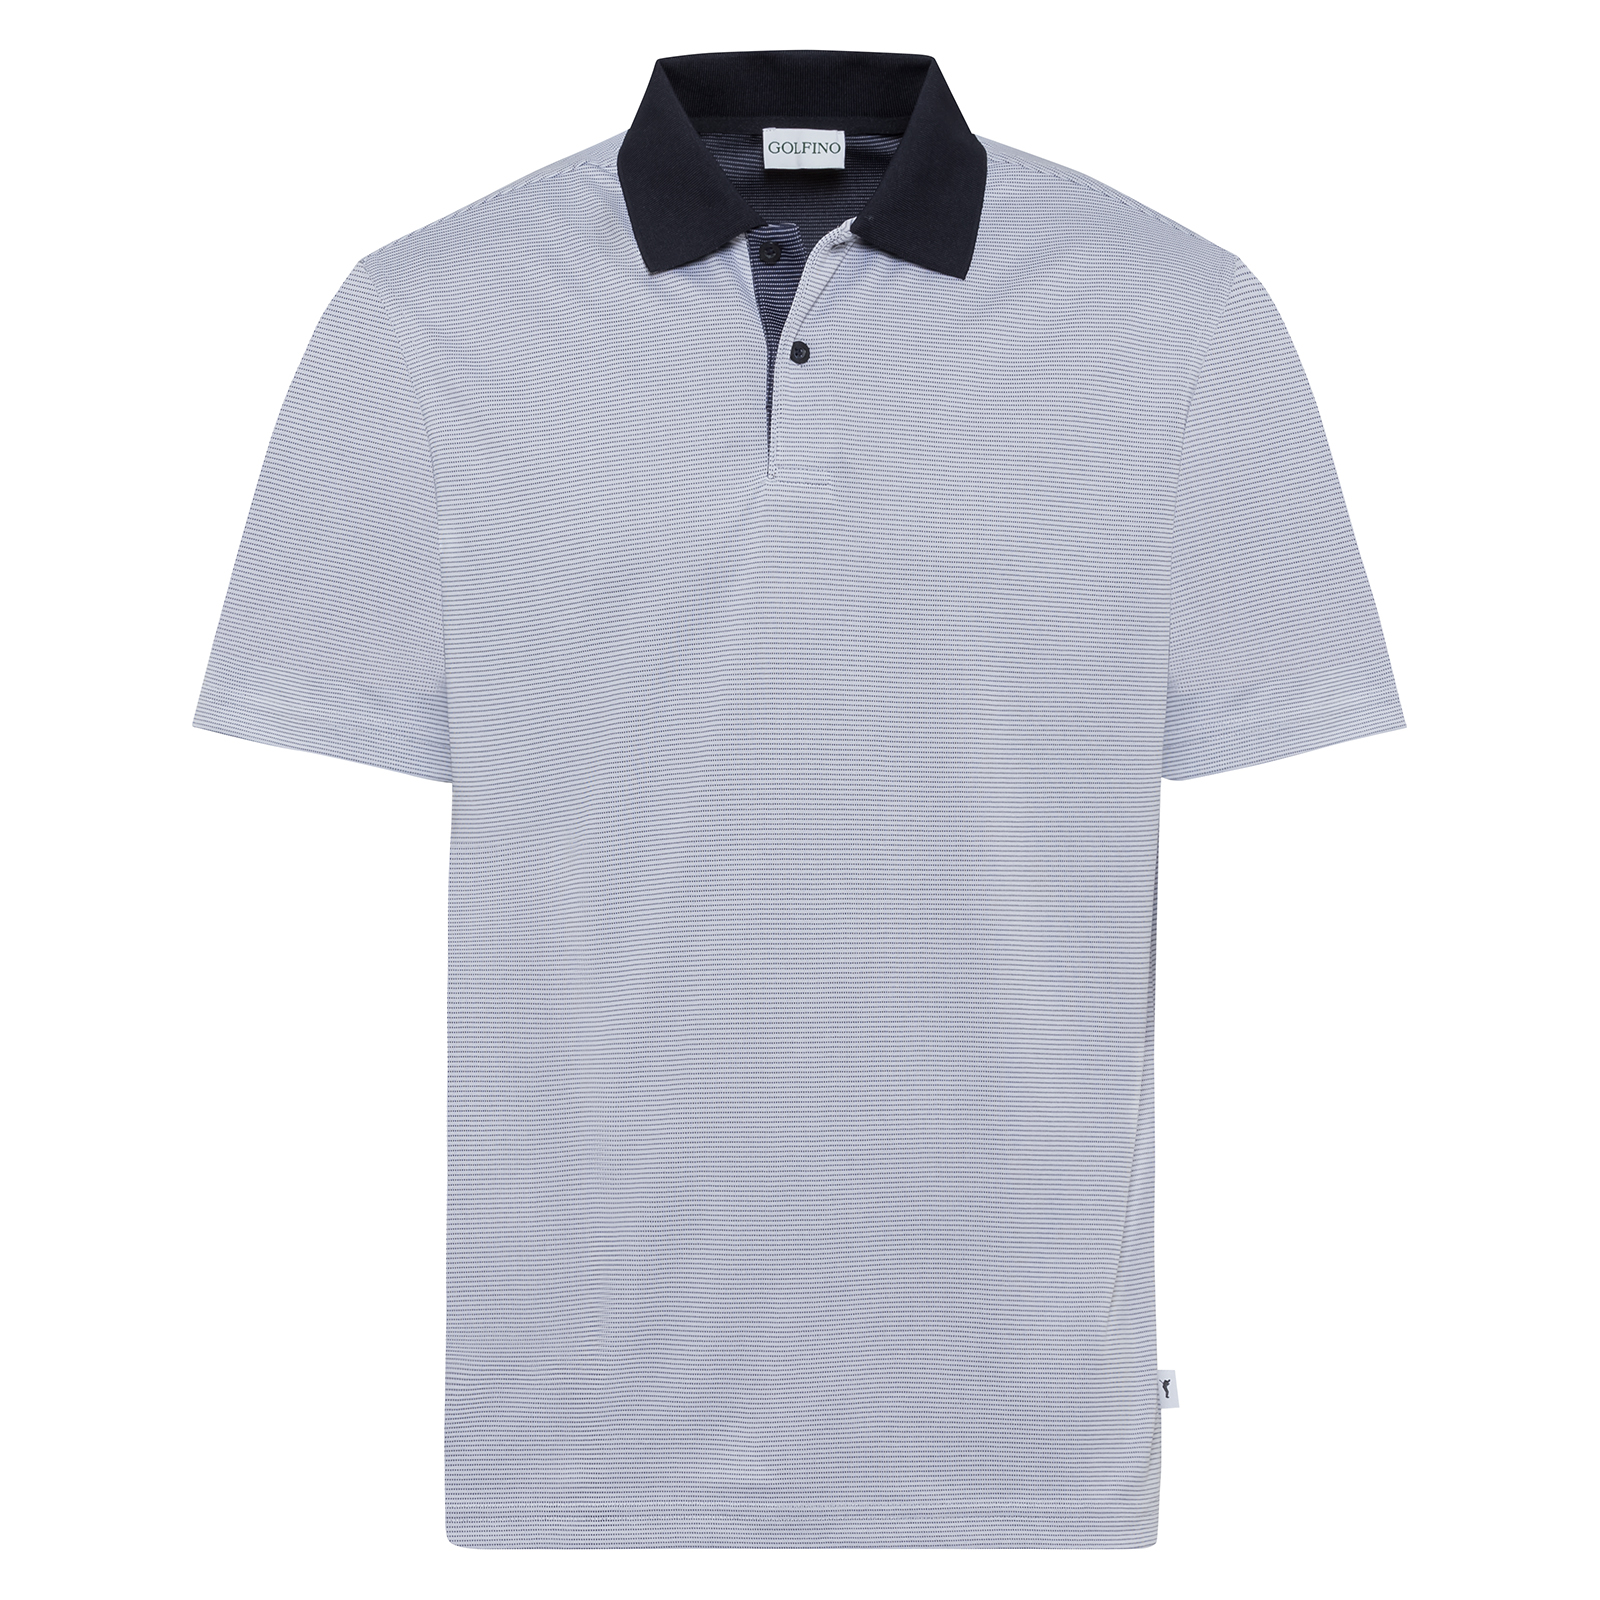 Men's quick dry golf polo shirt 